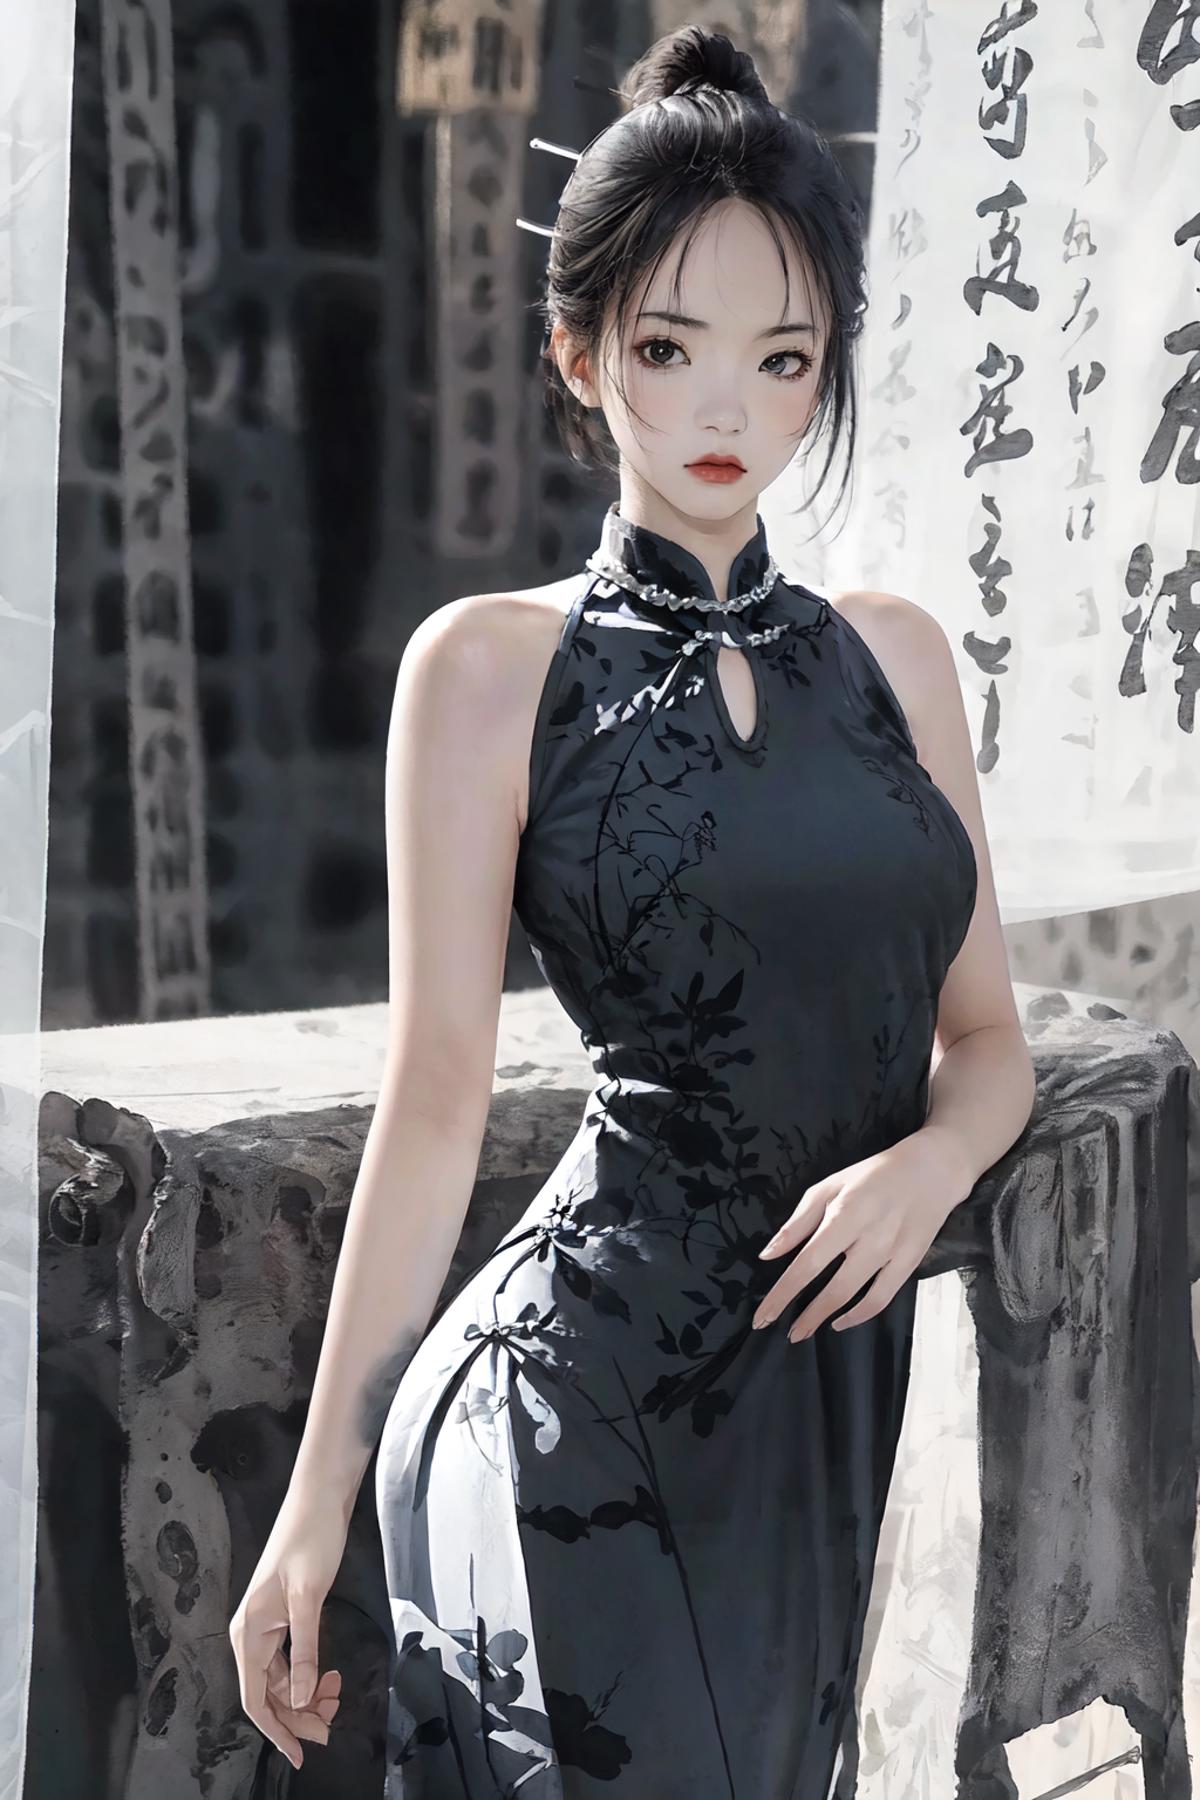 AI model image by XiongSan